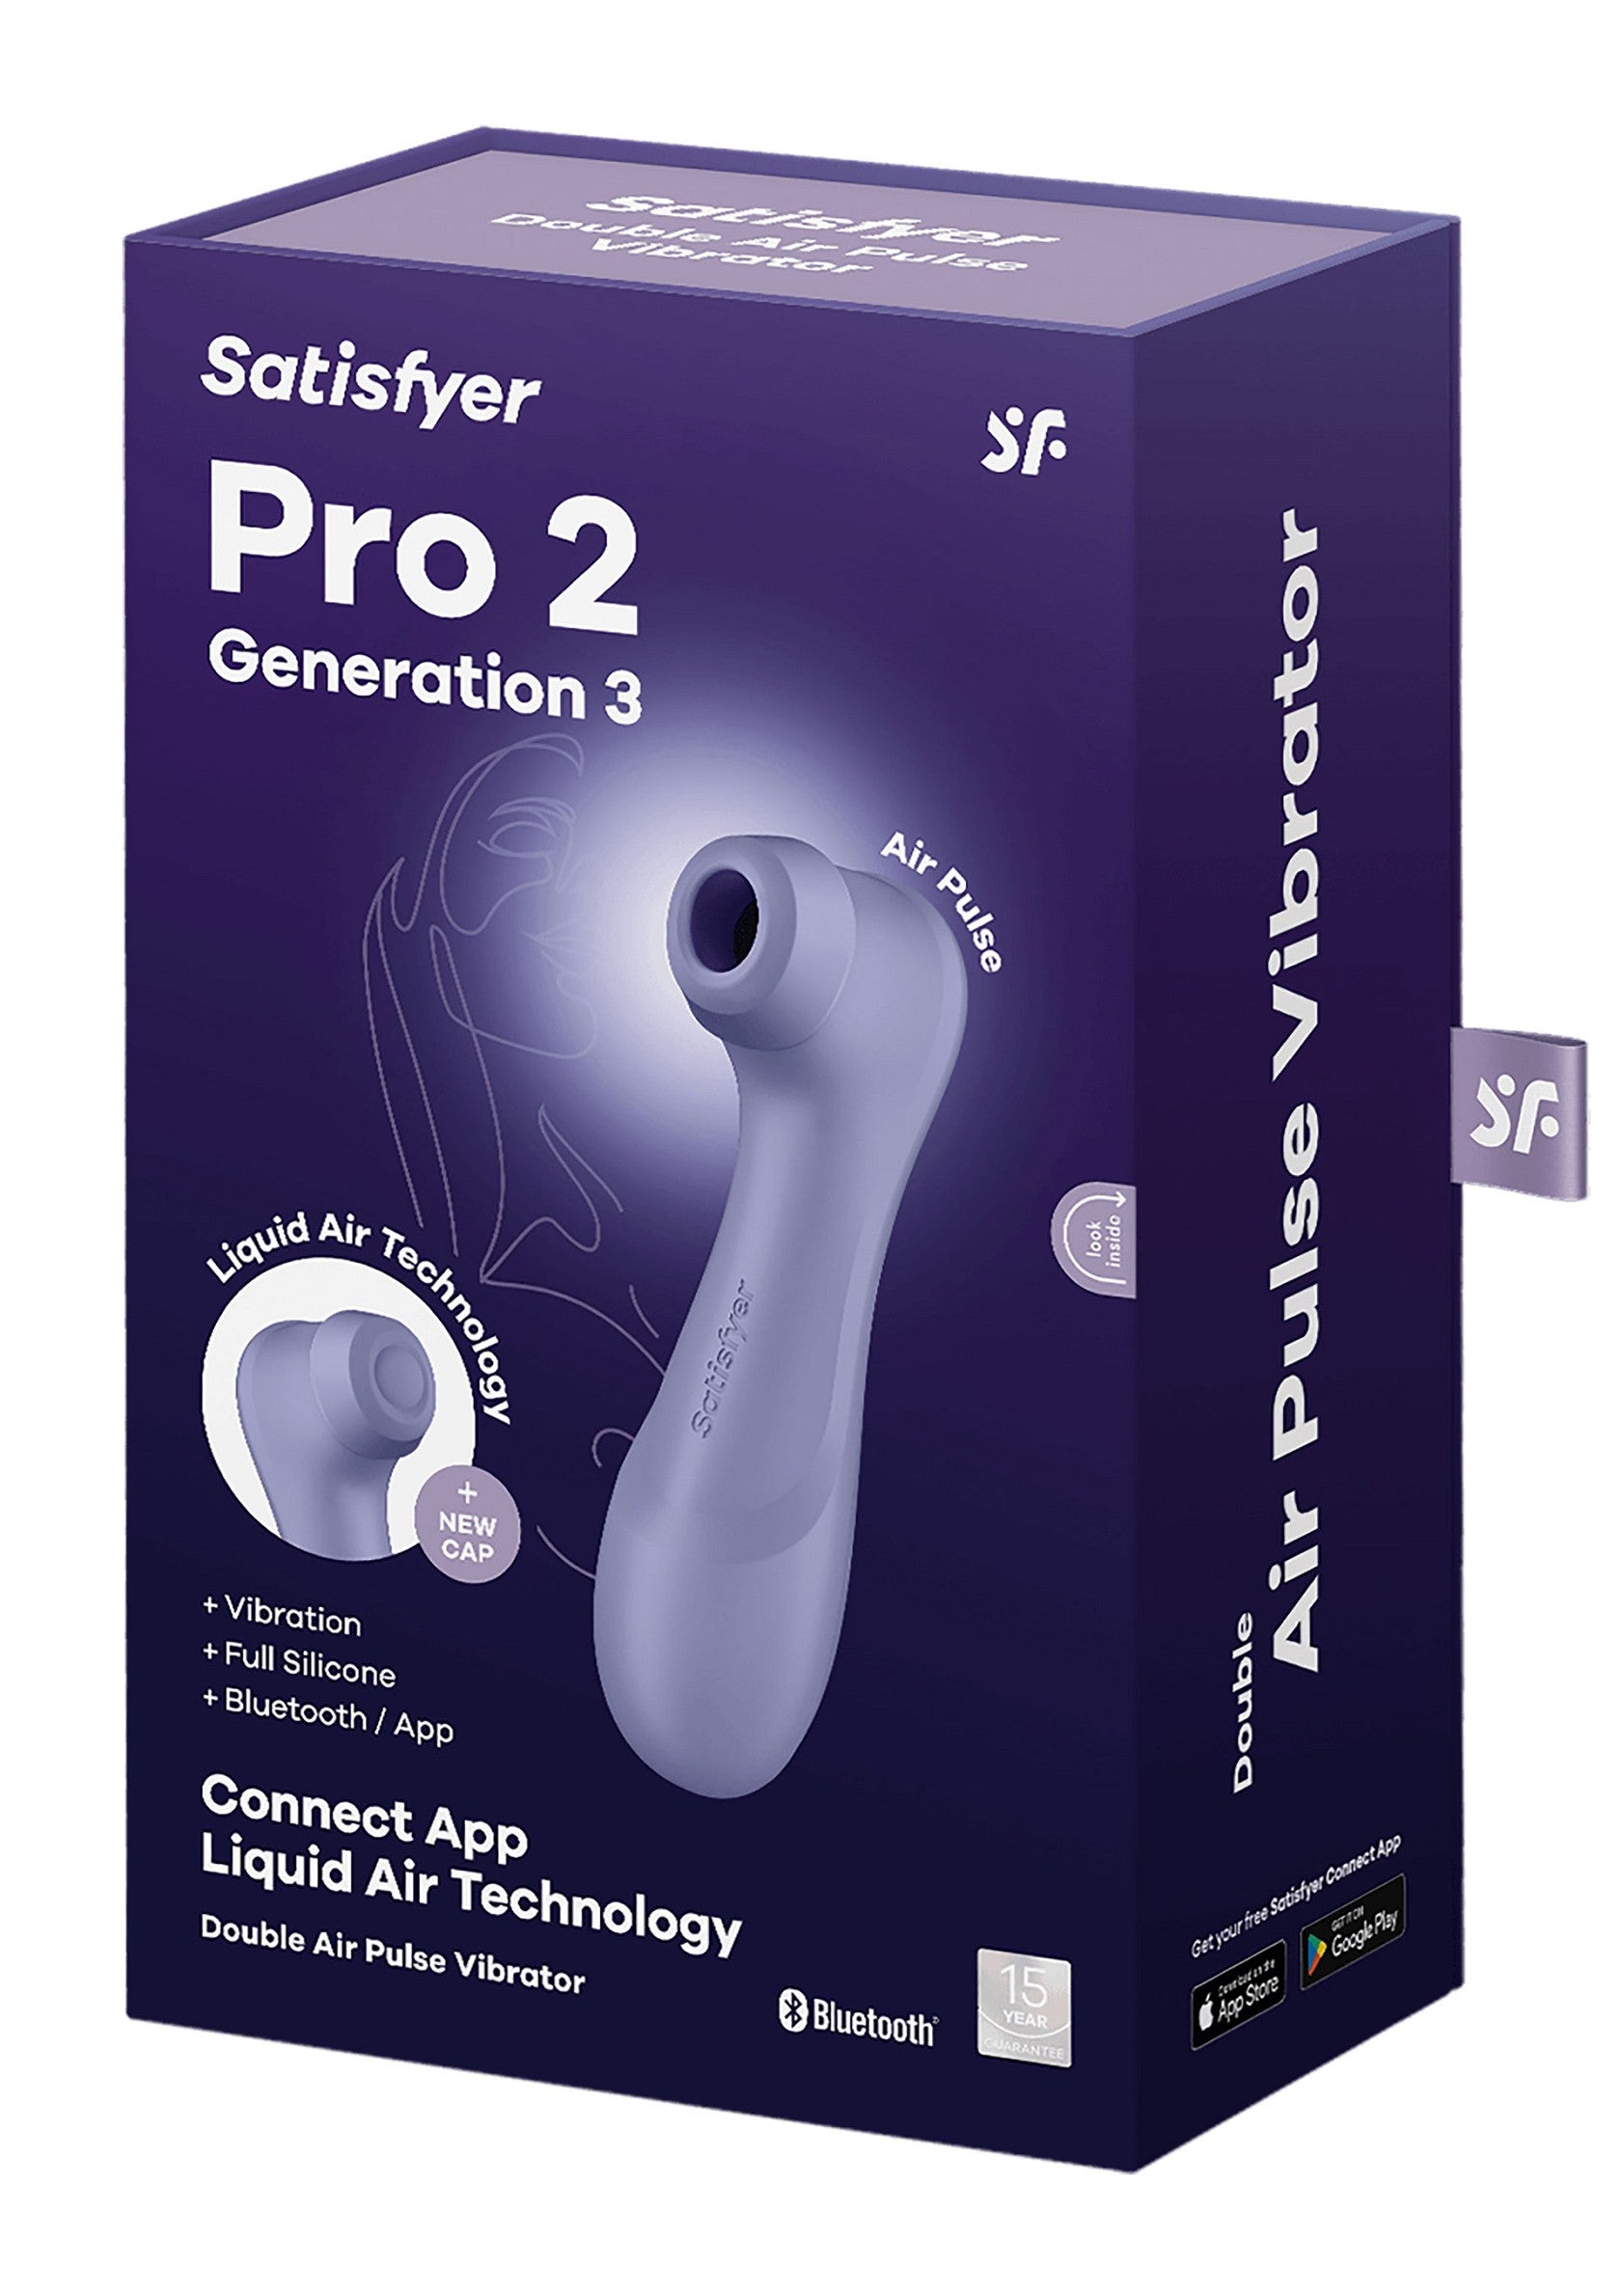 Satisfyer Pro 2 Generation 3 +Vibraring +App PURPLE - 8